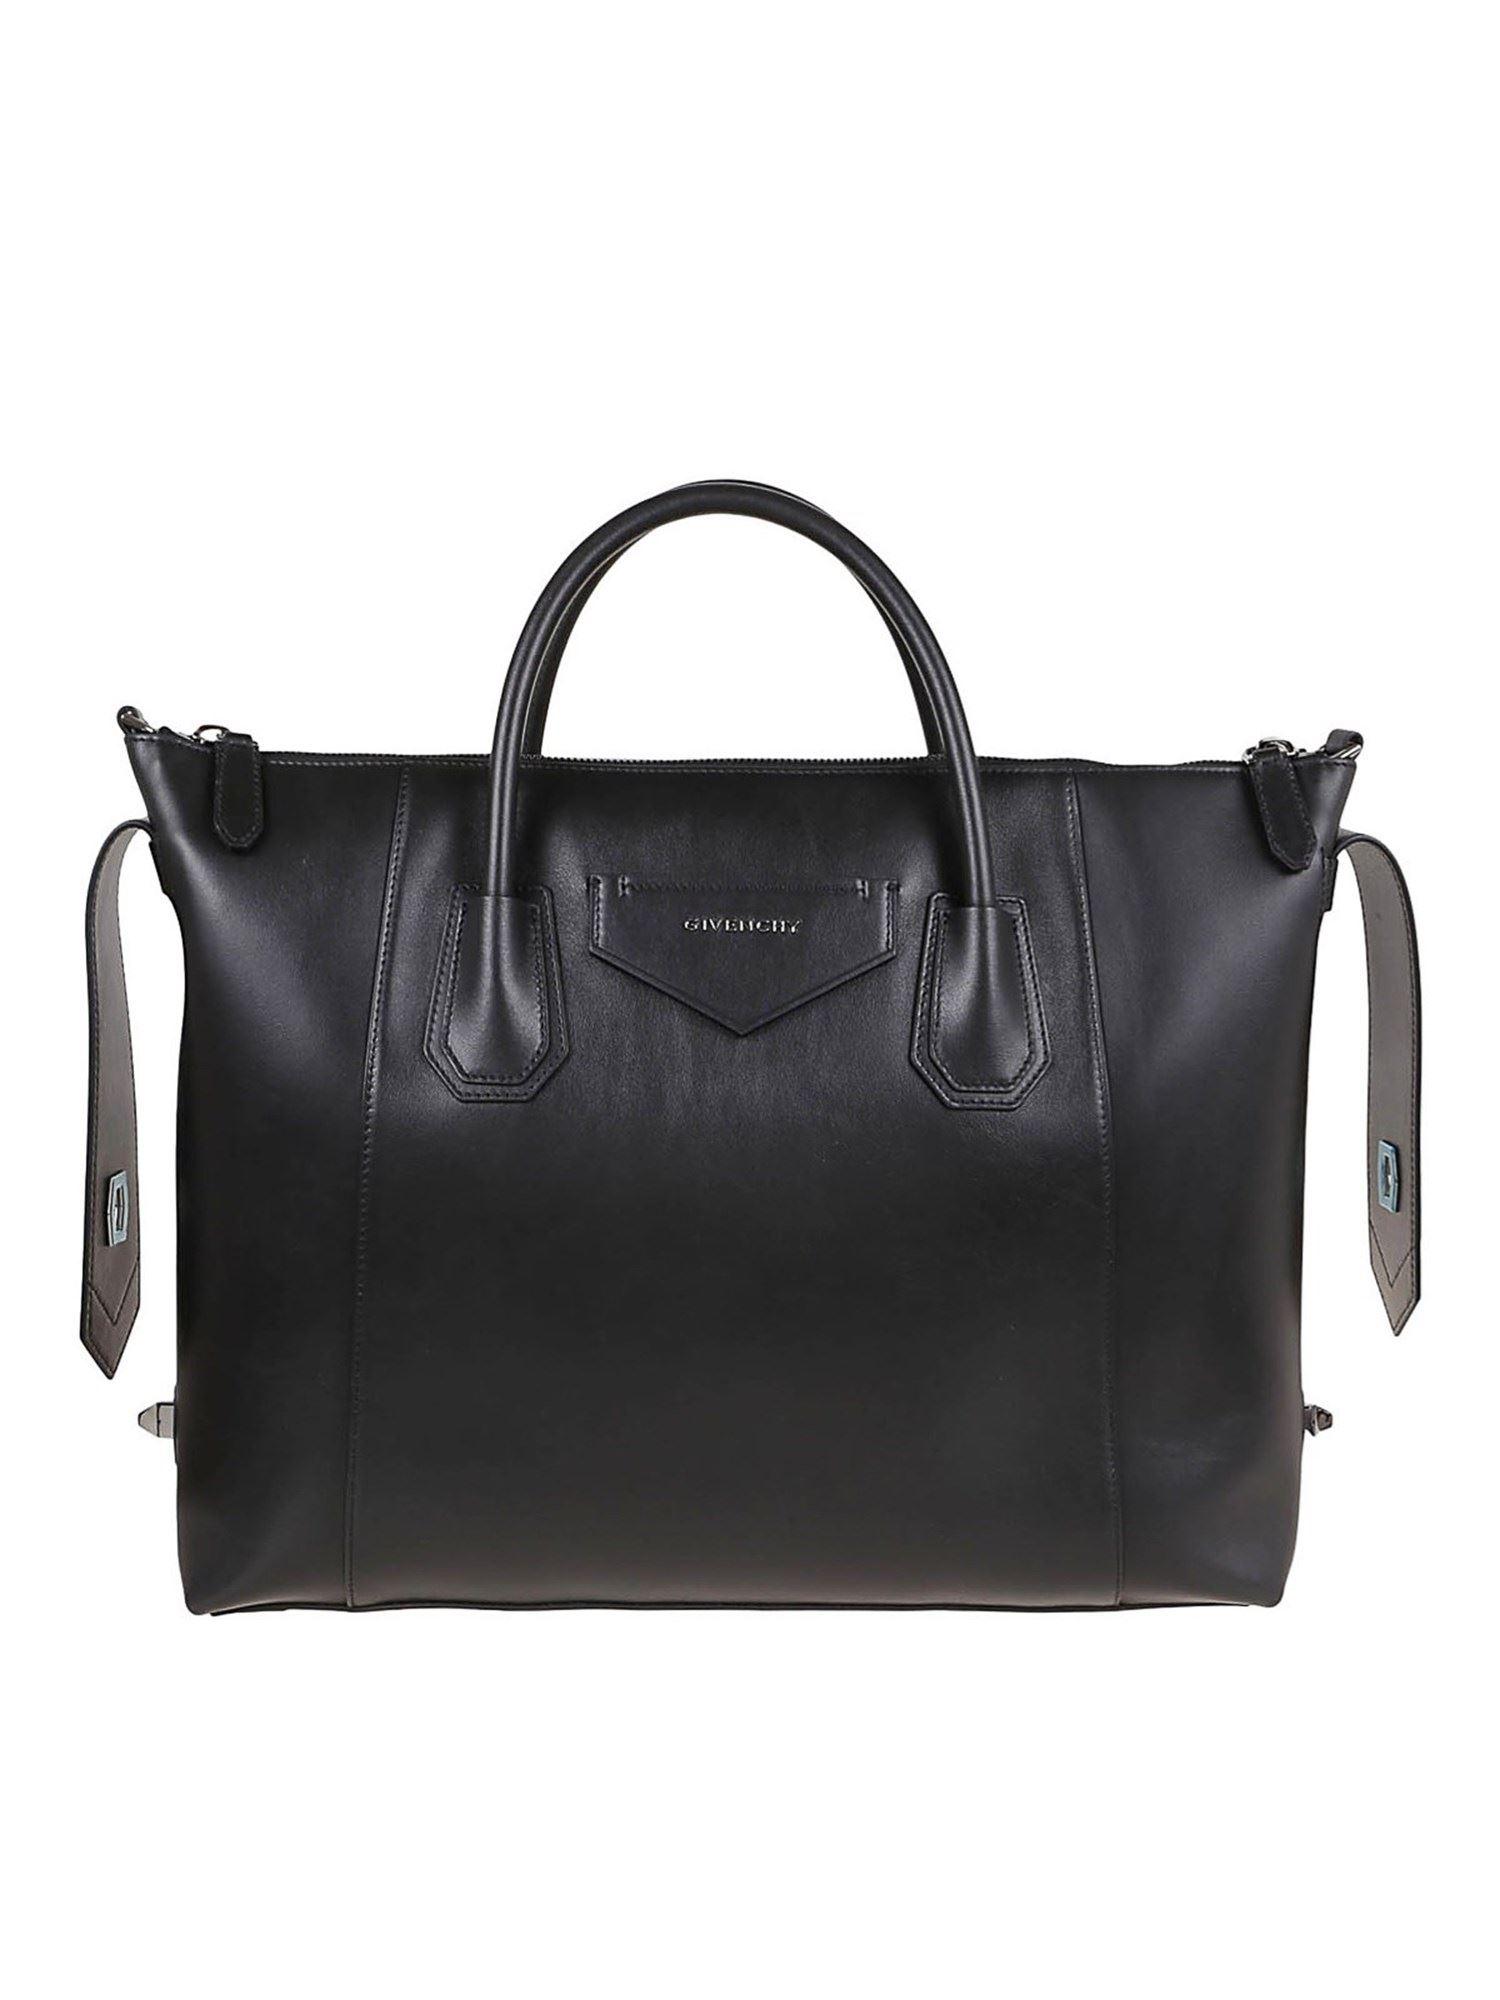 Givenchy Antigona Soft Medium Bag in Black - Lyst